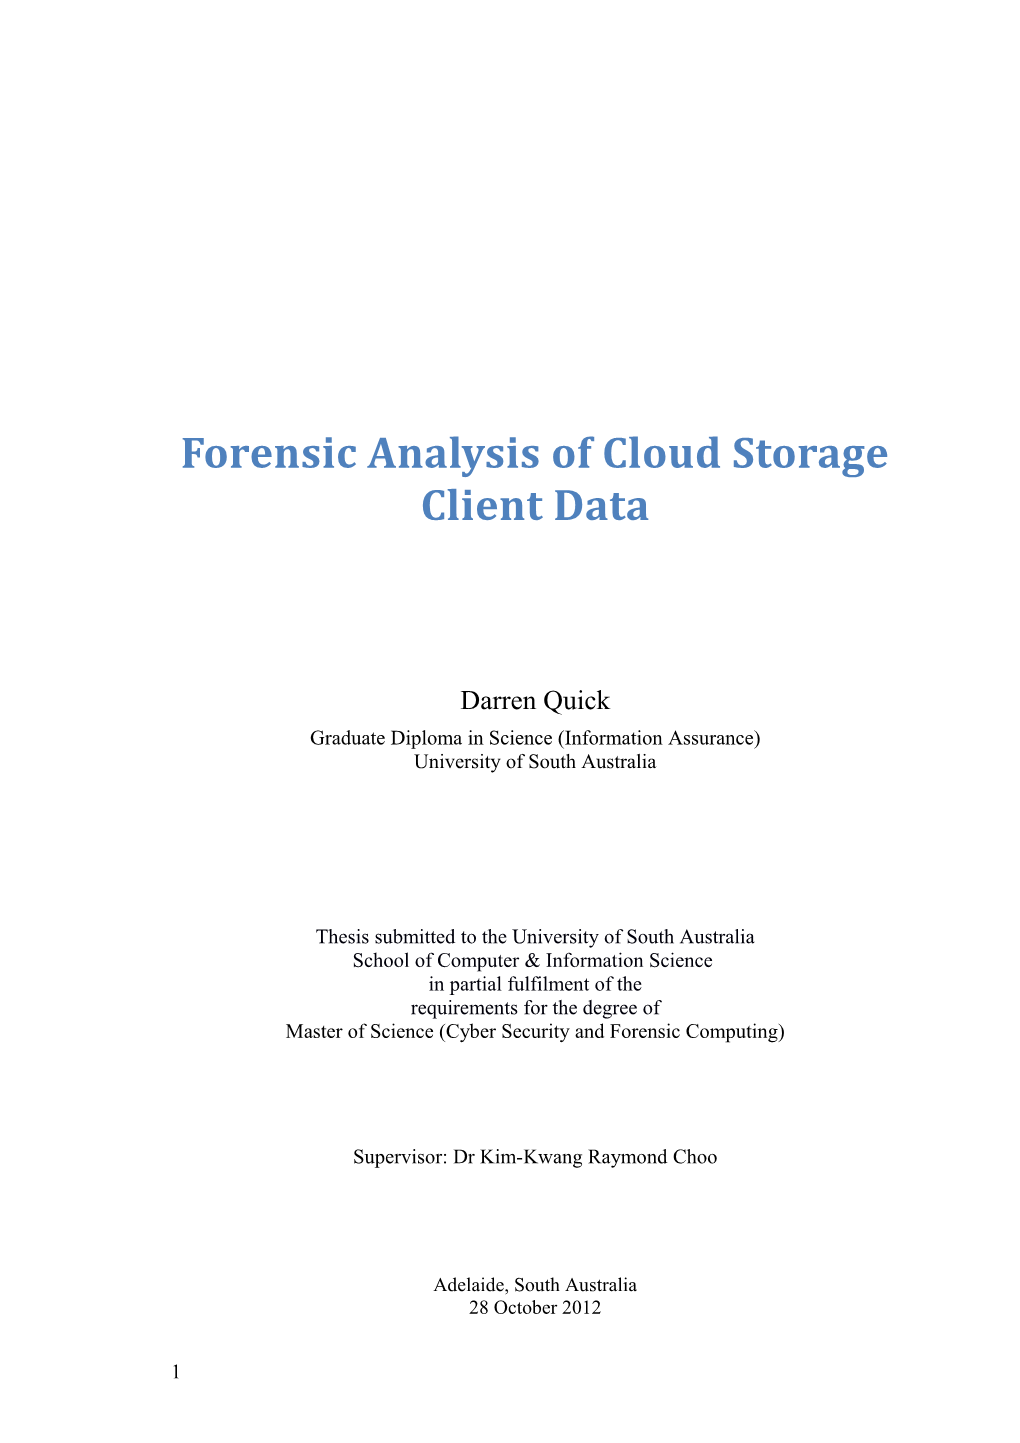 Cloud Storage Forensic Analysis